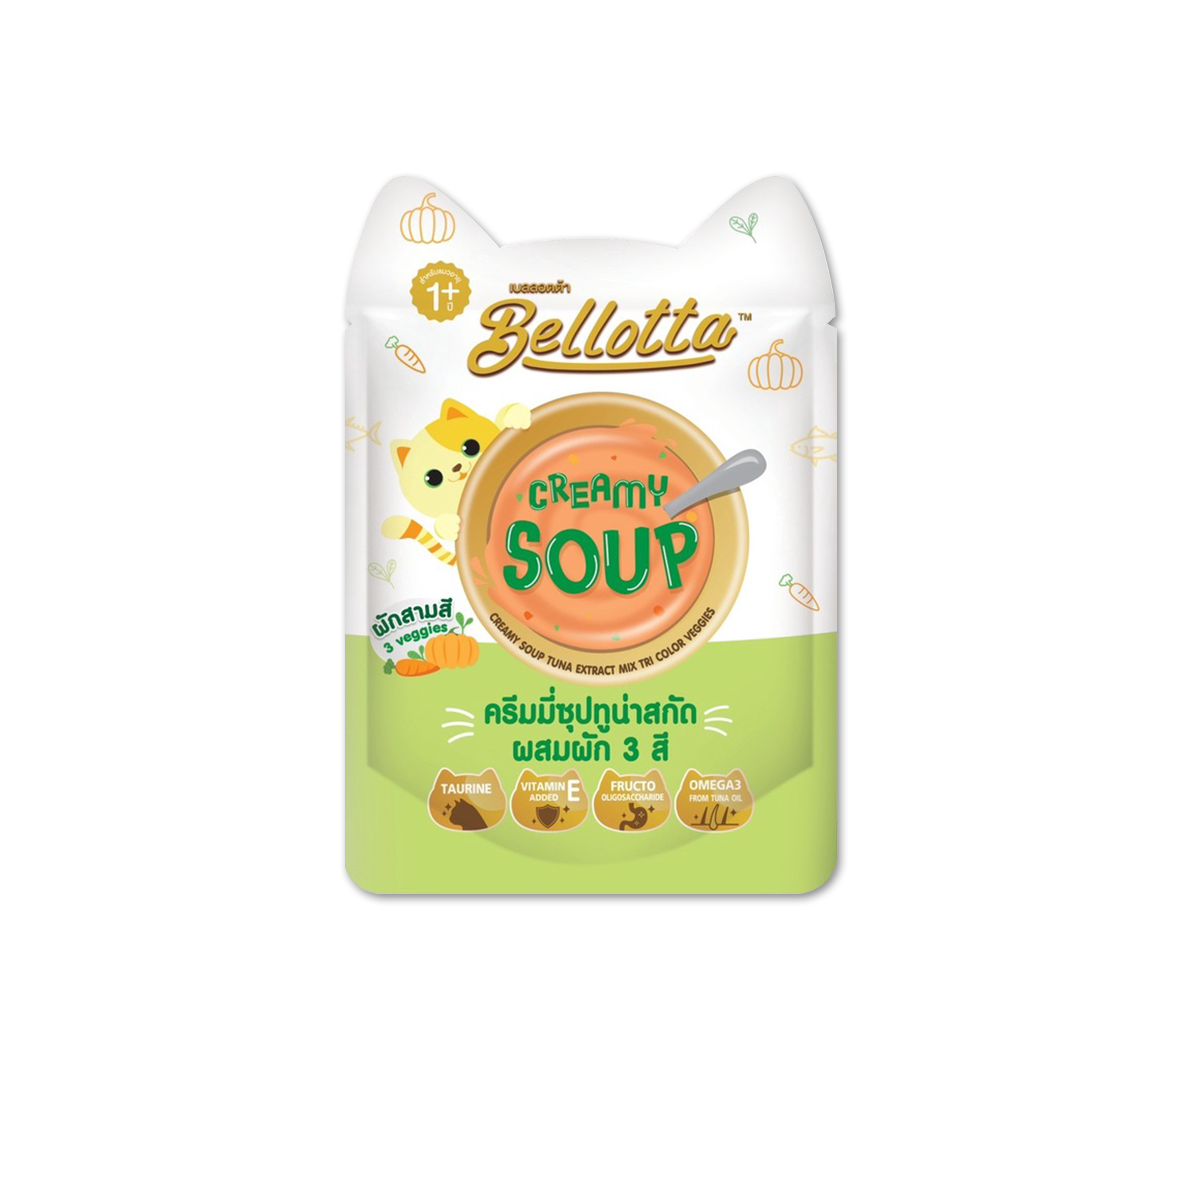 Bellotta Creamy Soup Creamy Tuna Extract mix Tri Color Veggies เบลลอตต้า ชนิดน้ำซุปซอง รสทูน่าสกัดและผัก 3 สี ขนาด 40 กรัม (12 ซอง)